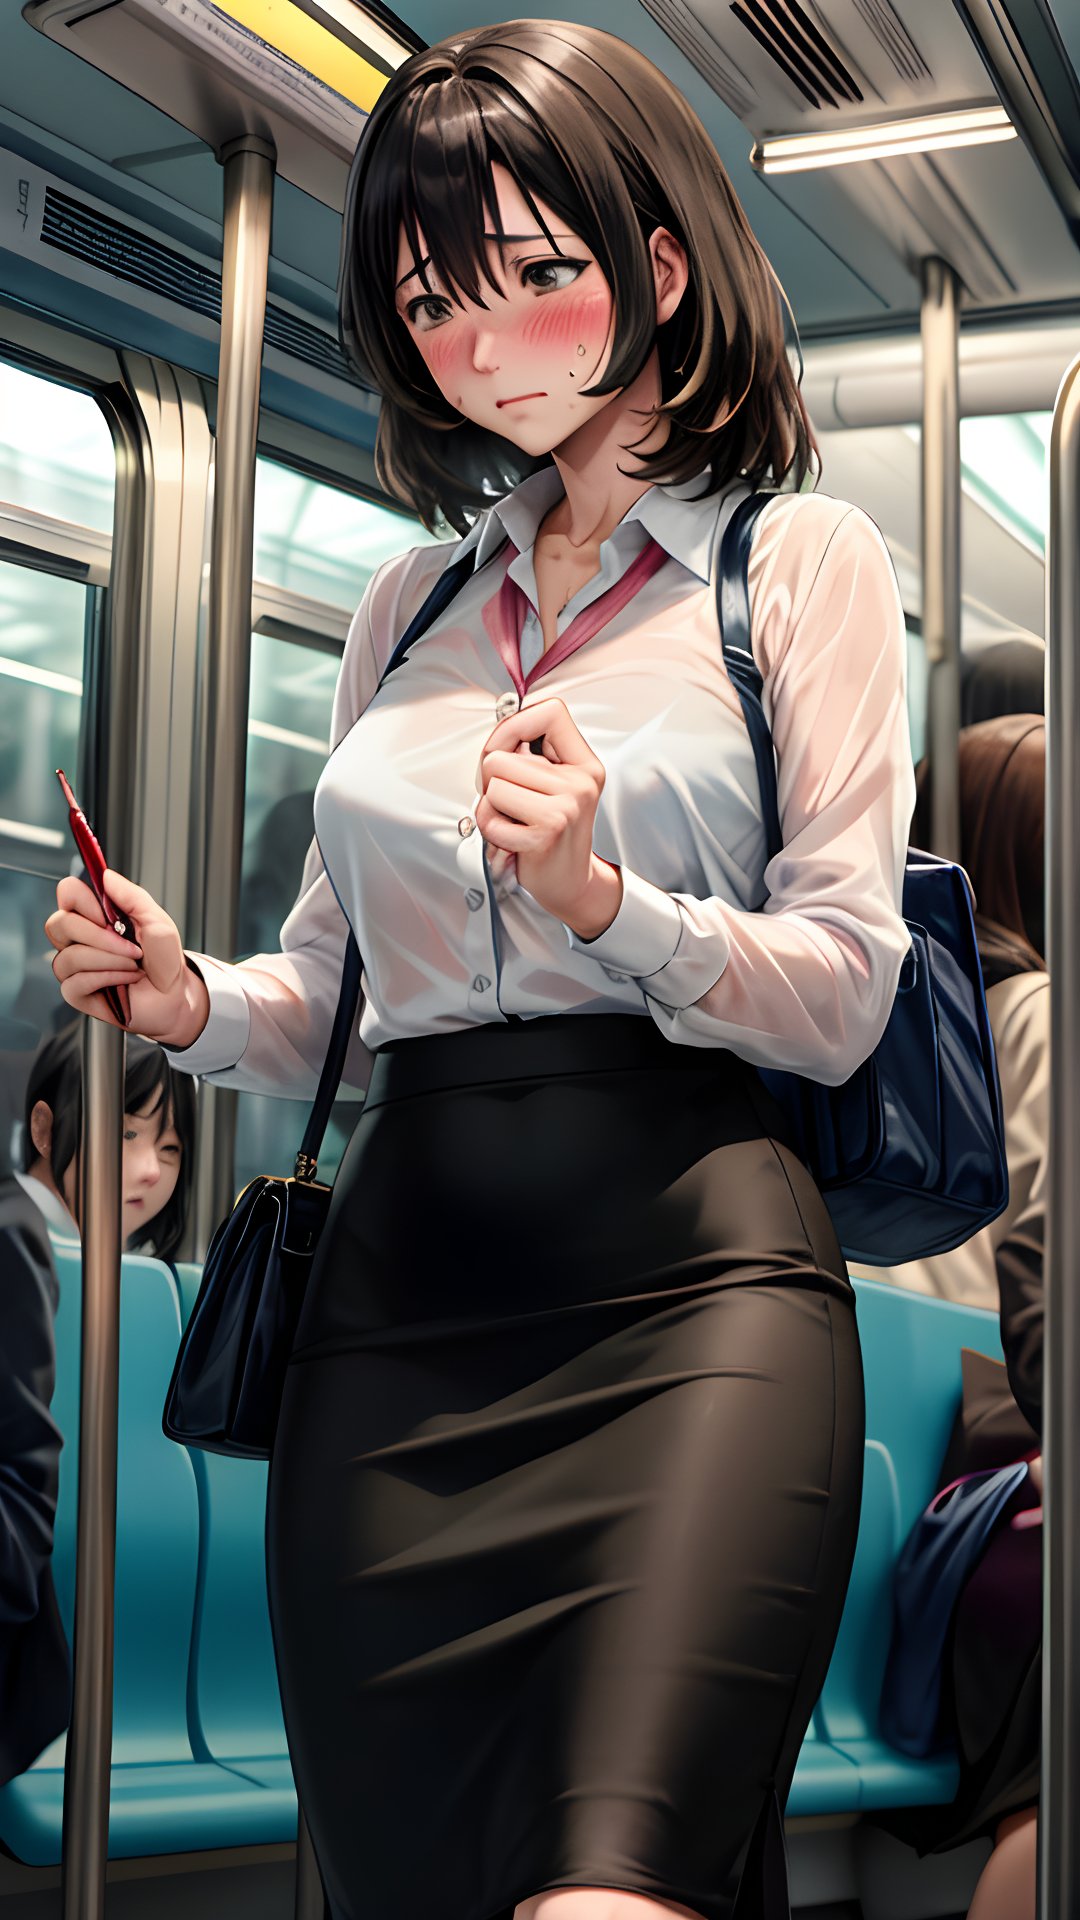 (masterpiece, best quality:1.1), intricate details,(sweating, blush, embarrassed: 1.1)   ,pencil skirt   , sheer Clothing, in the train  , ( passengers, commuters : 1.2 )  , 
natsukawa_machiko